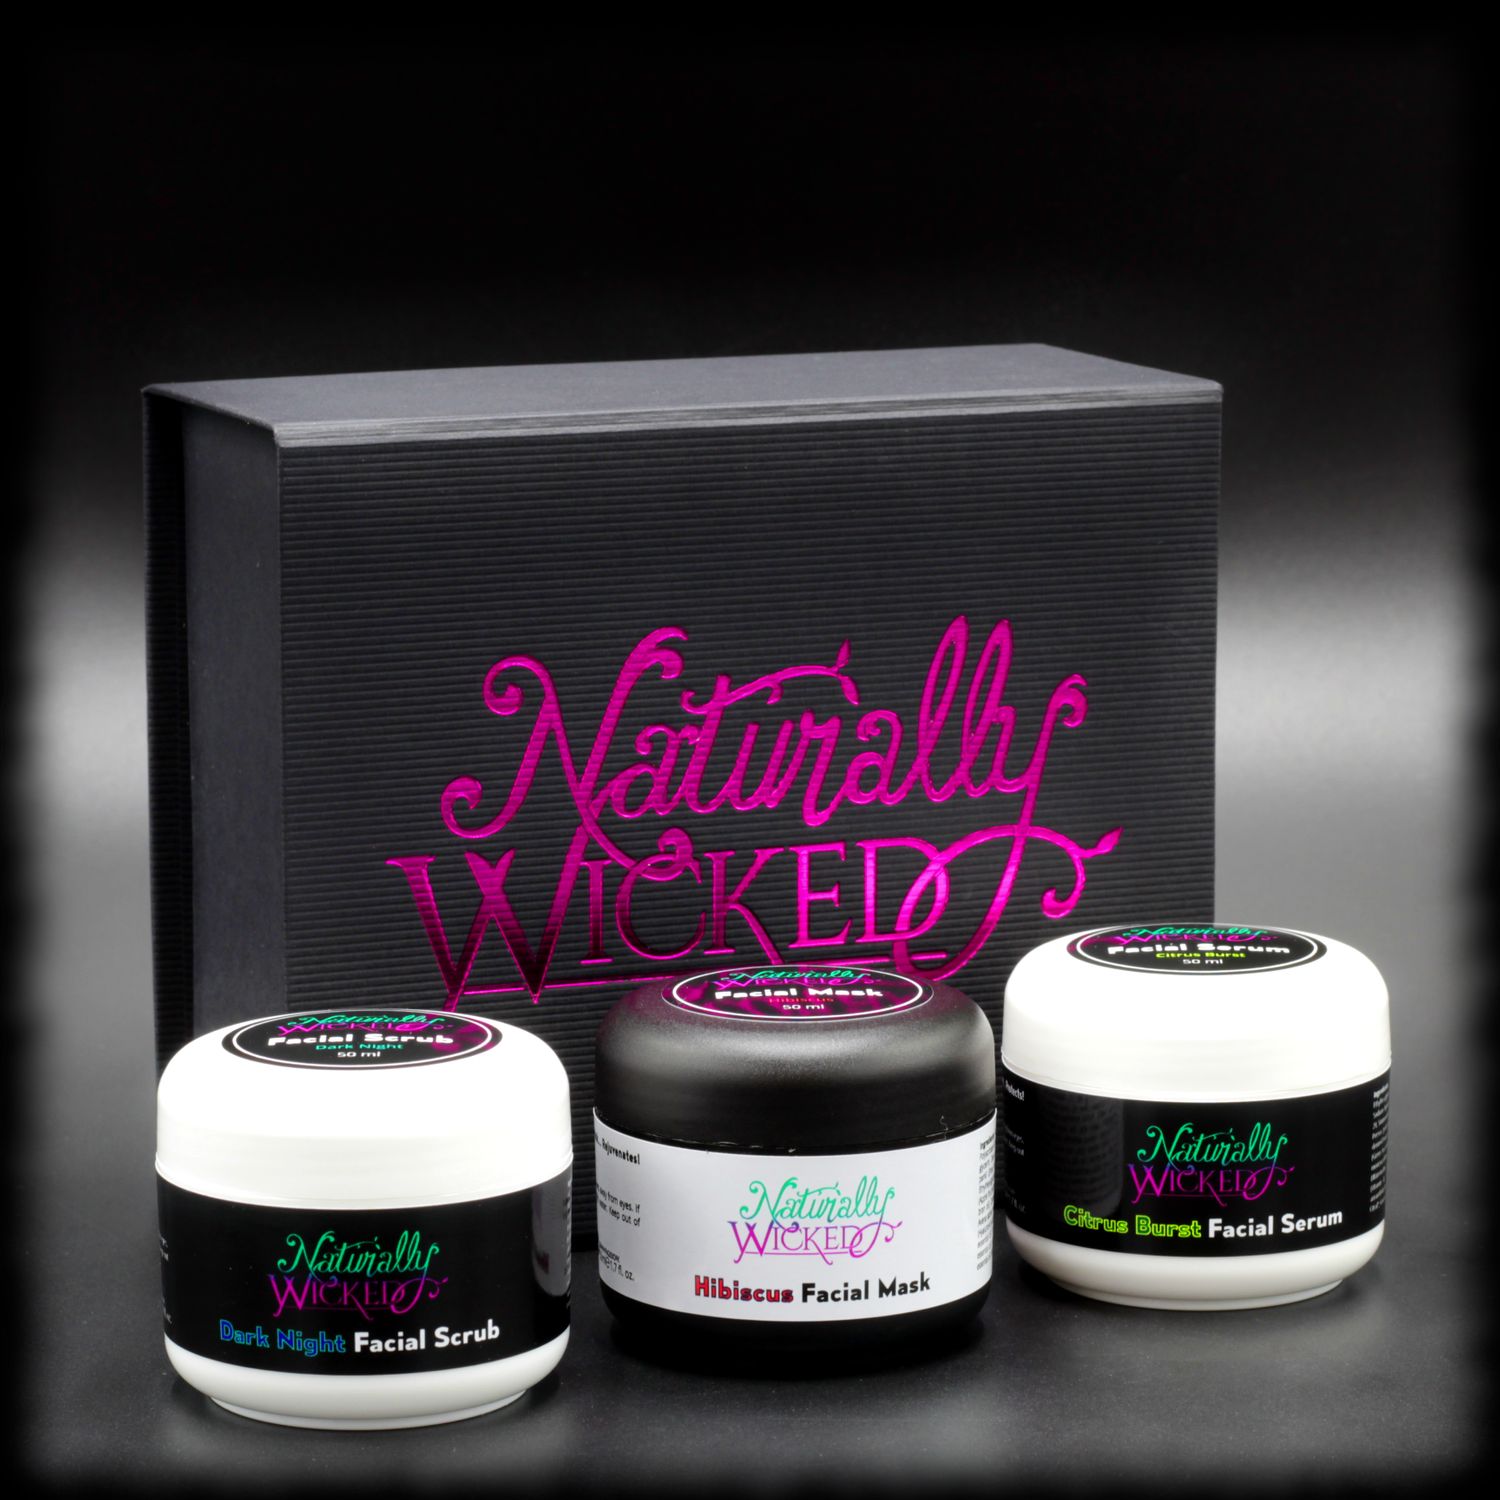 Naturally Wicked Original 3 Step Facial Kit With Dark Night Facial Scrub, Hibiscus Facial Mask & Citrus Burst Facial Serum In Front Of Original Pink & Black Box